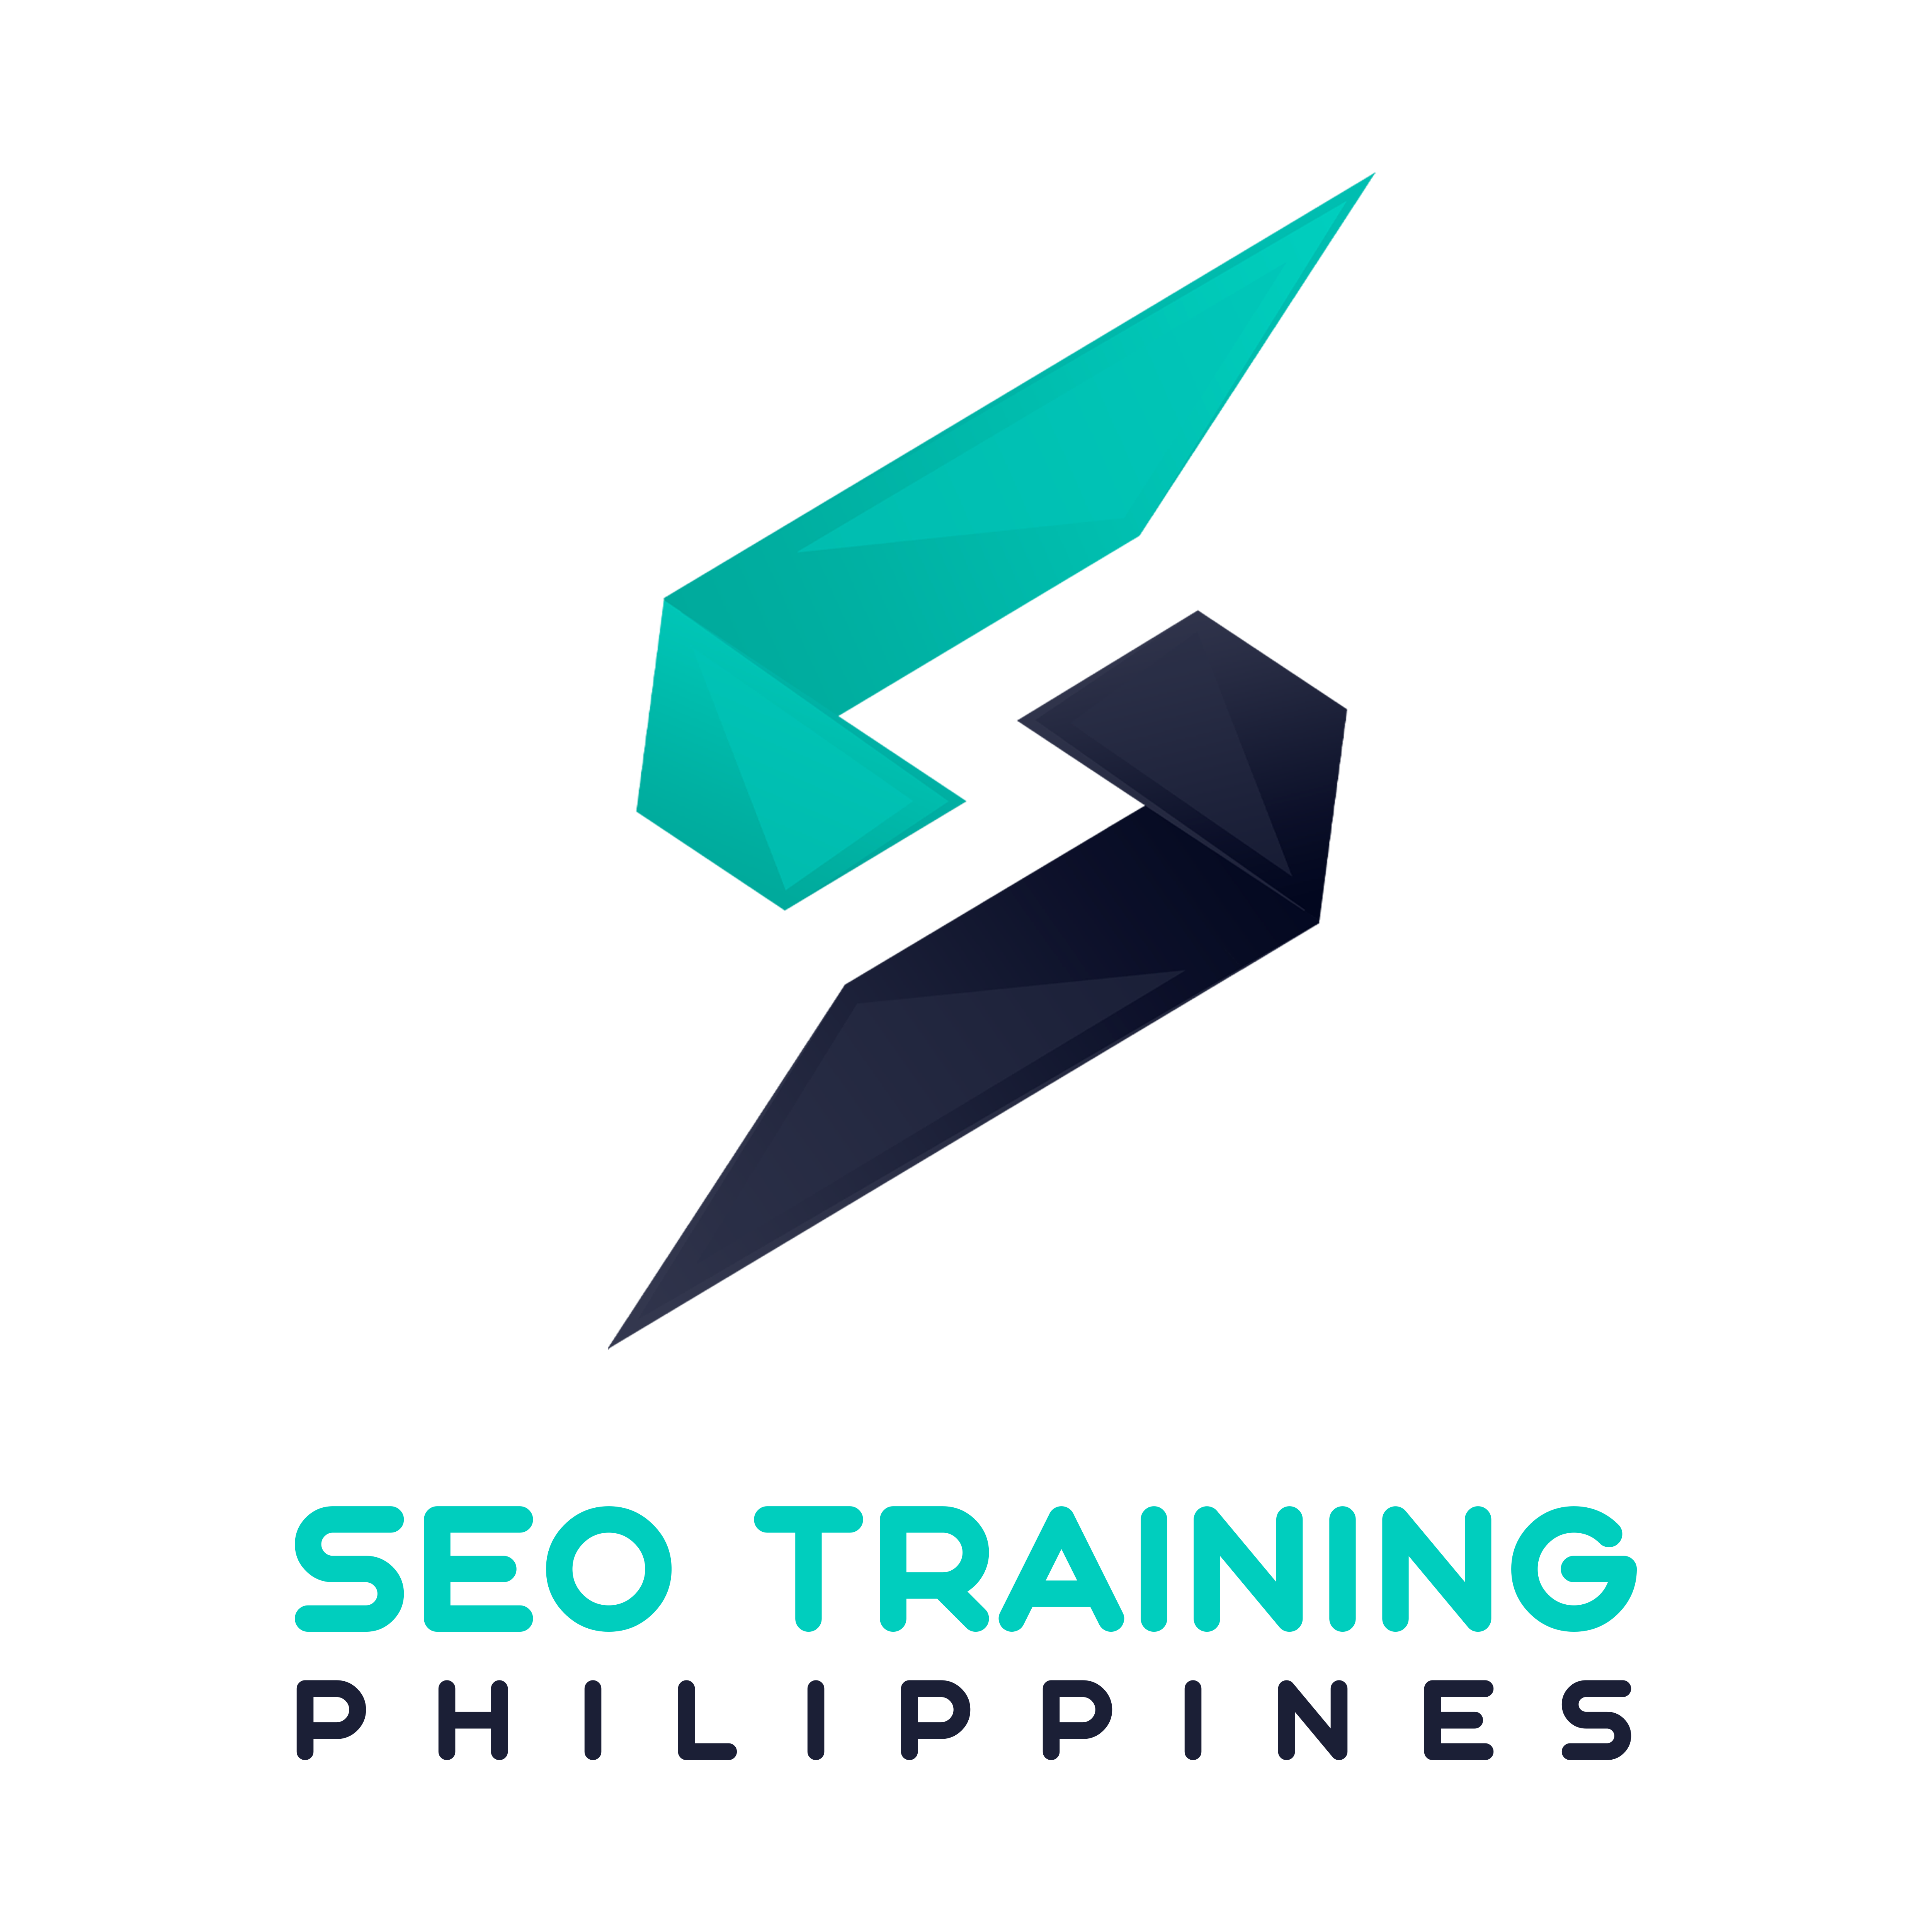 seo training ph logo